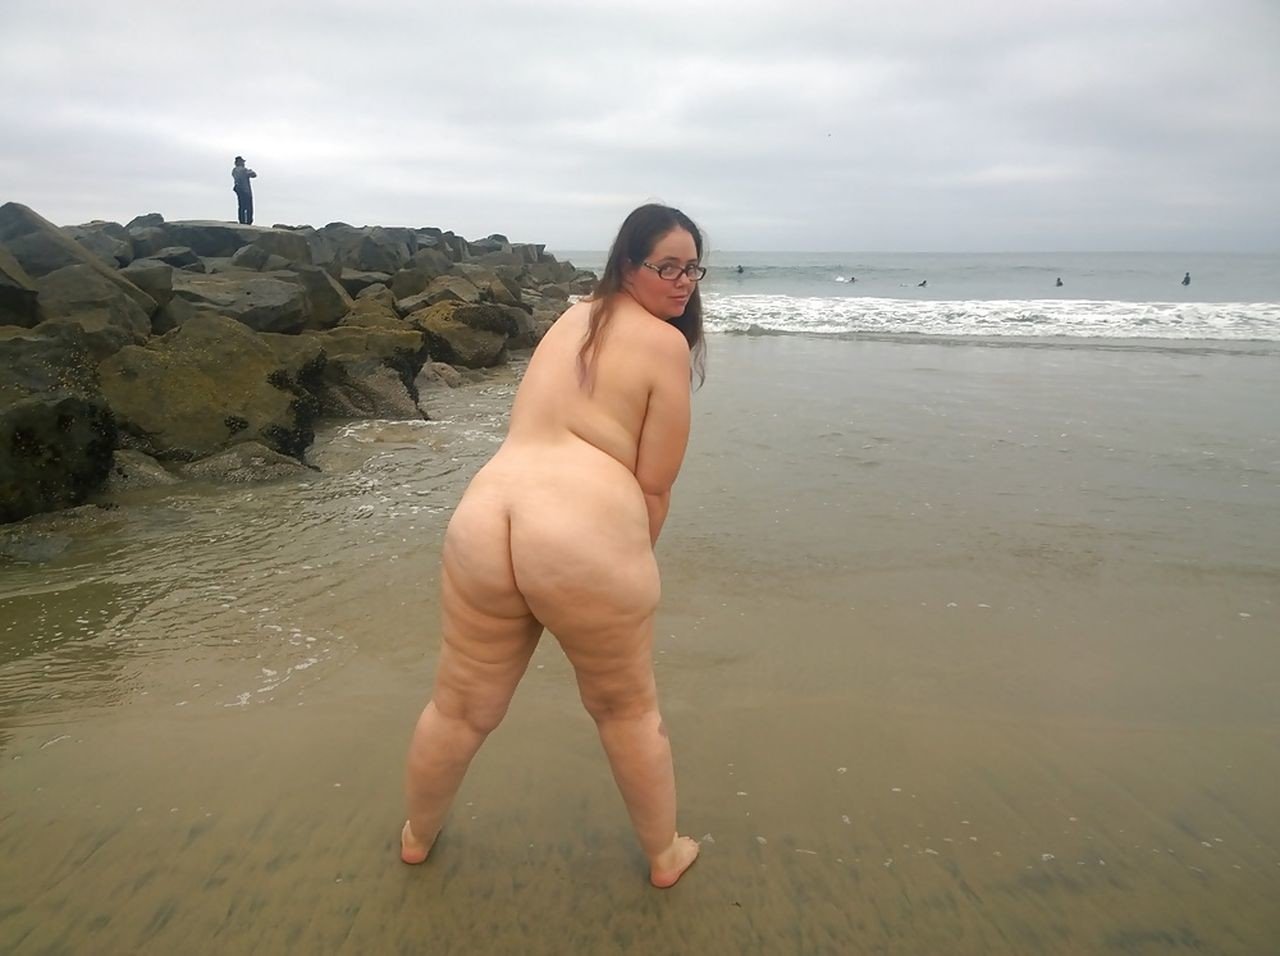 akshay bareja recommends Big Fat Girls On The Beach Porn